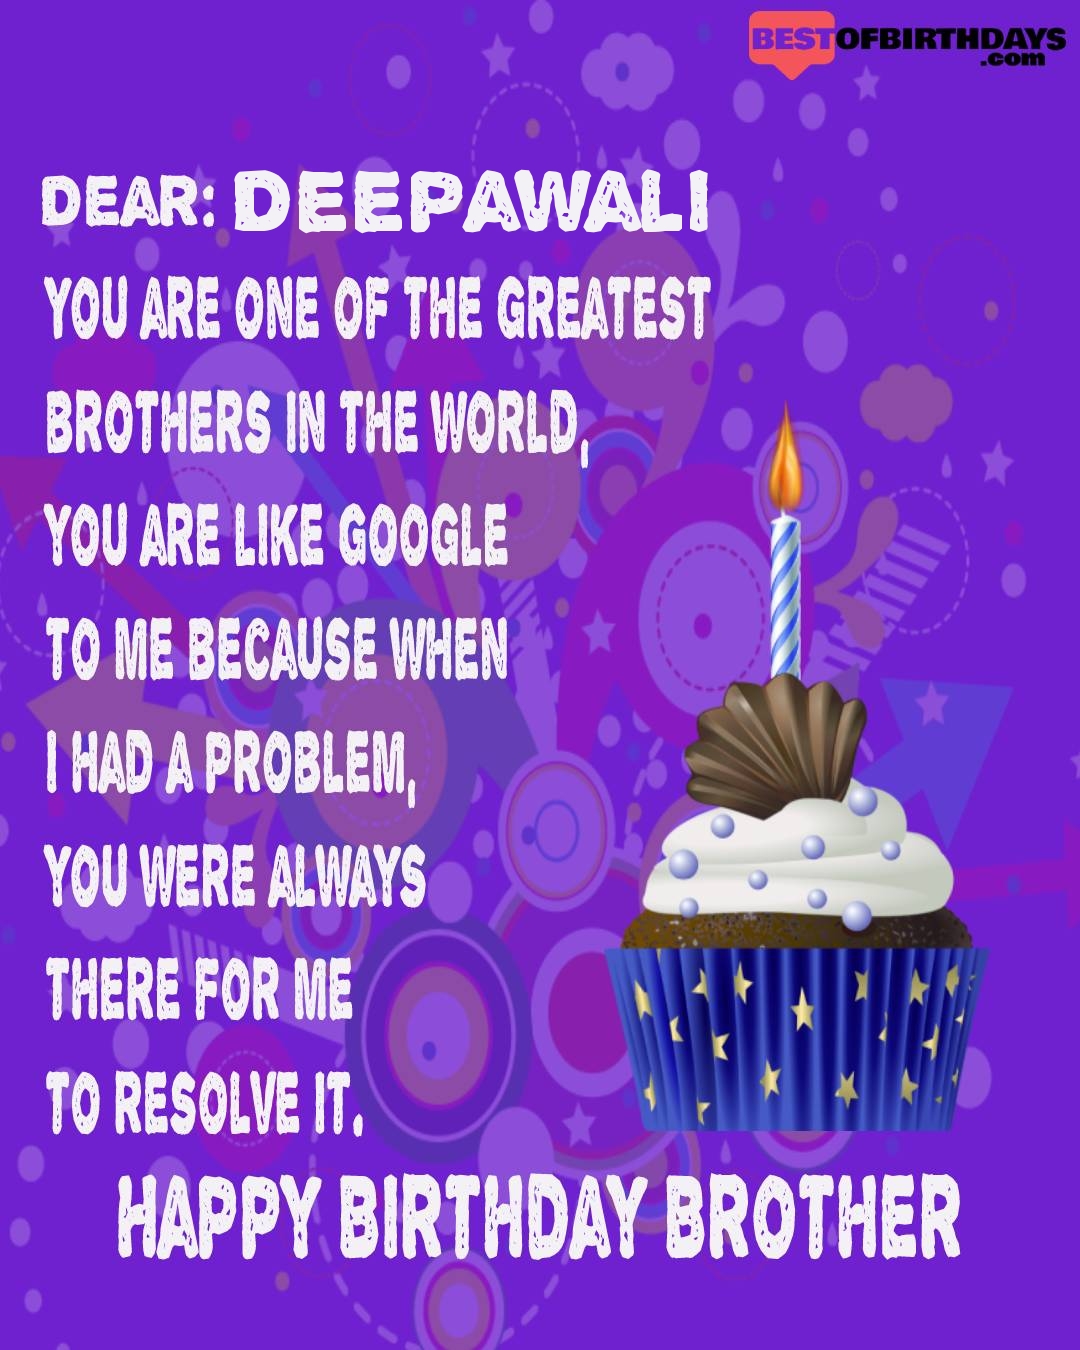 Happy birthday deepawali bhai brother bro